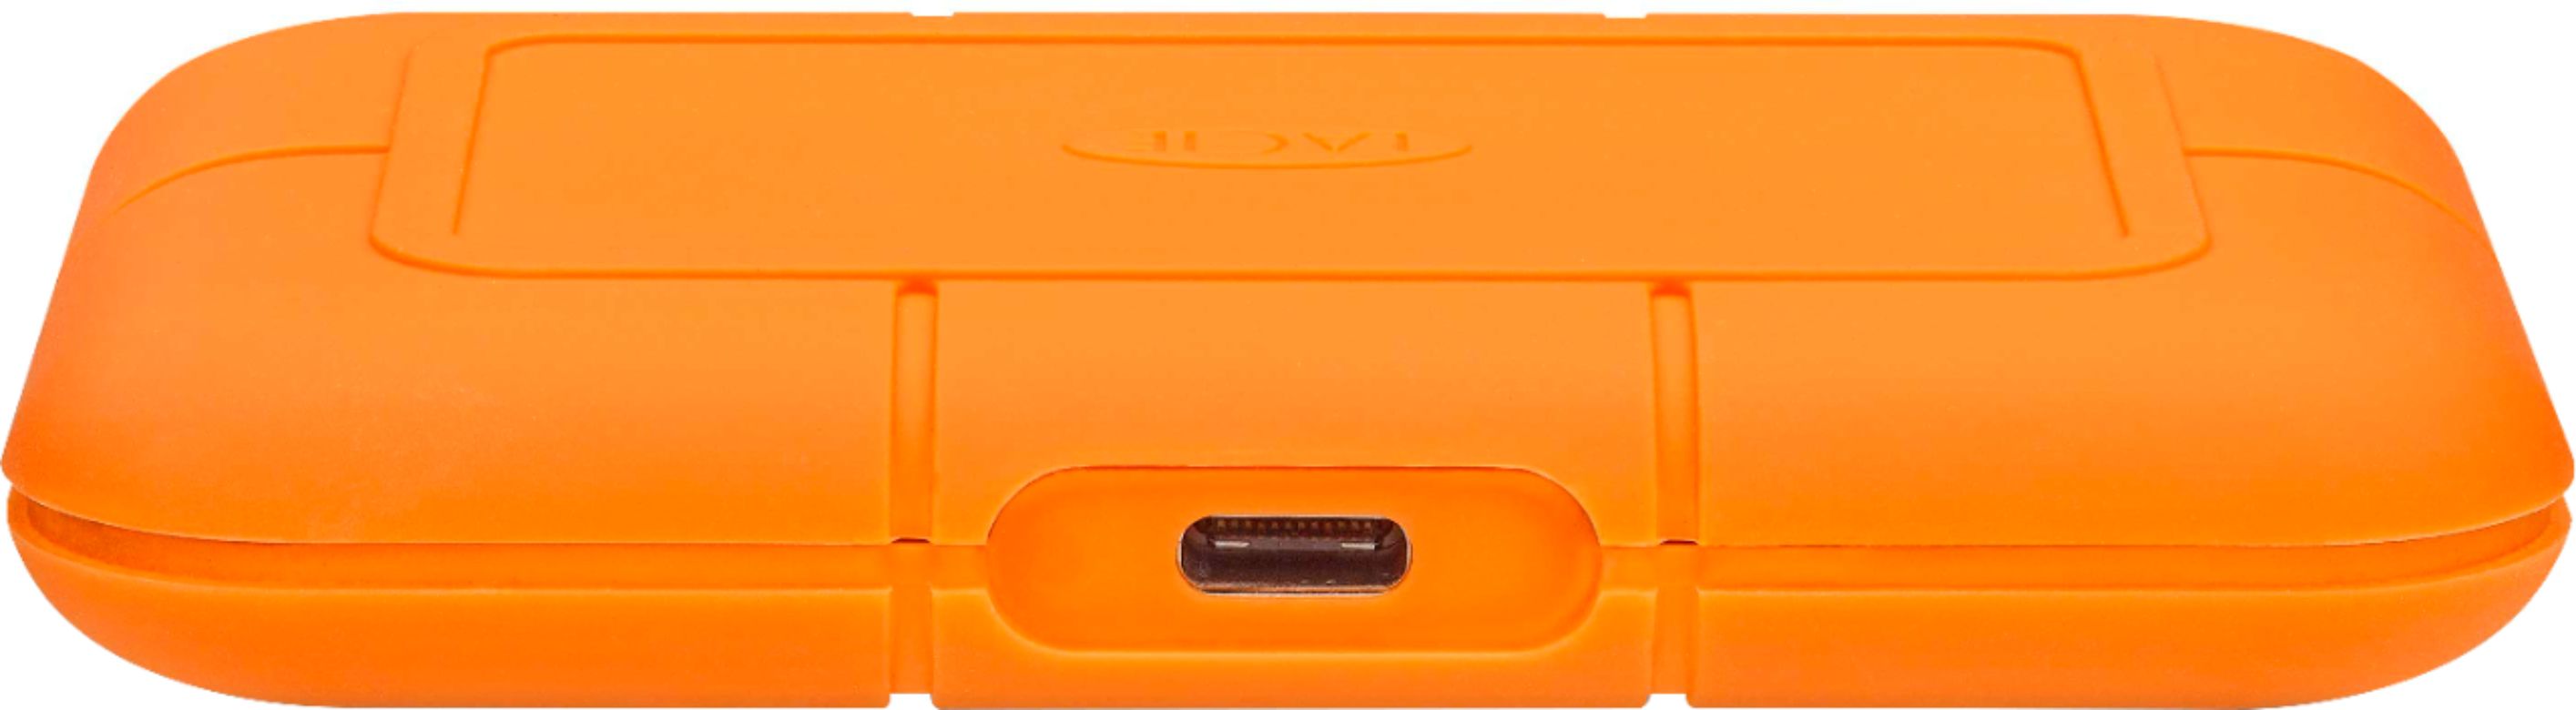 Blesiya Aluminium Legierung USB 3,0 500GB SSD Externe Solid State Drive Speicher USB 3,1 Gen-1 USB-C Kompatibel Typ C Schwarz 